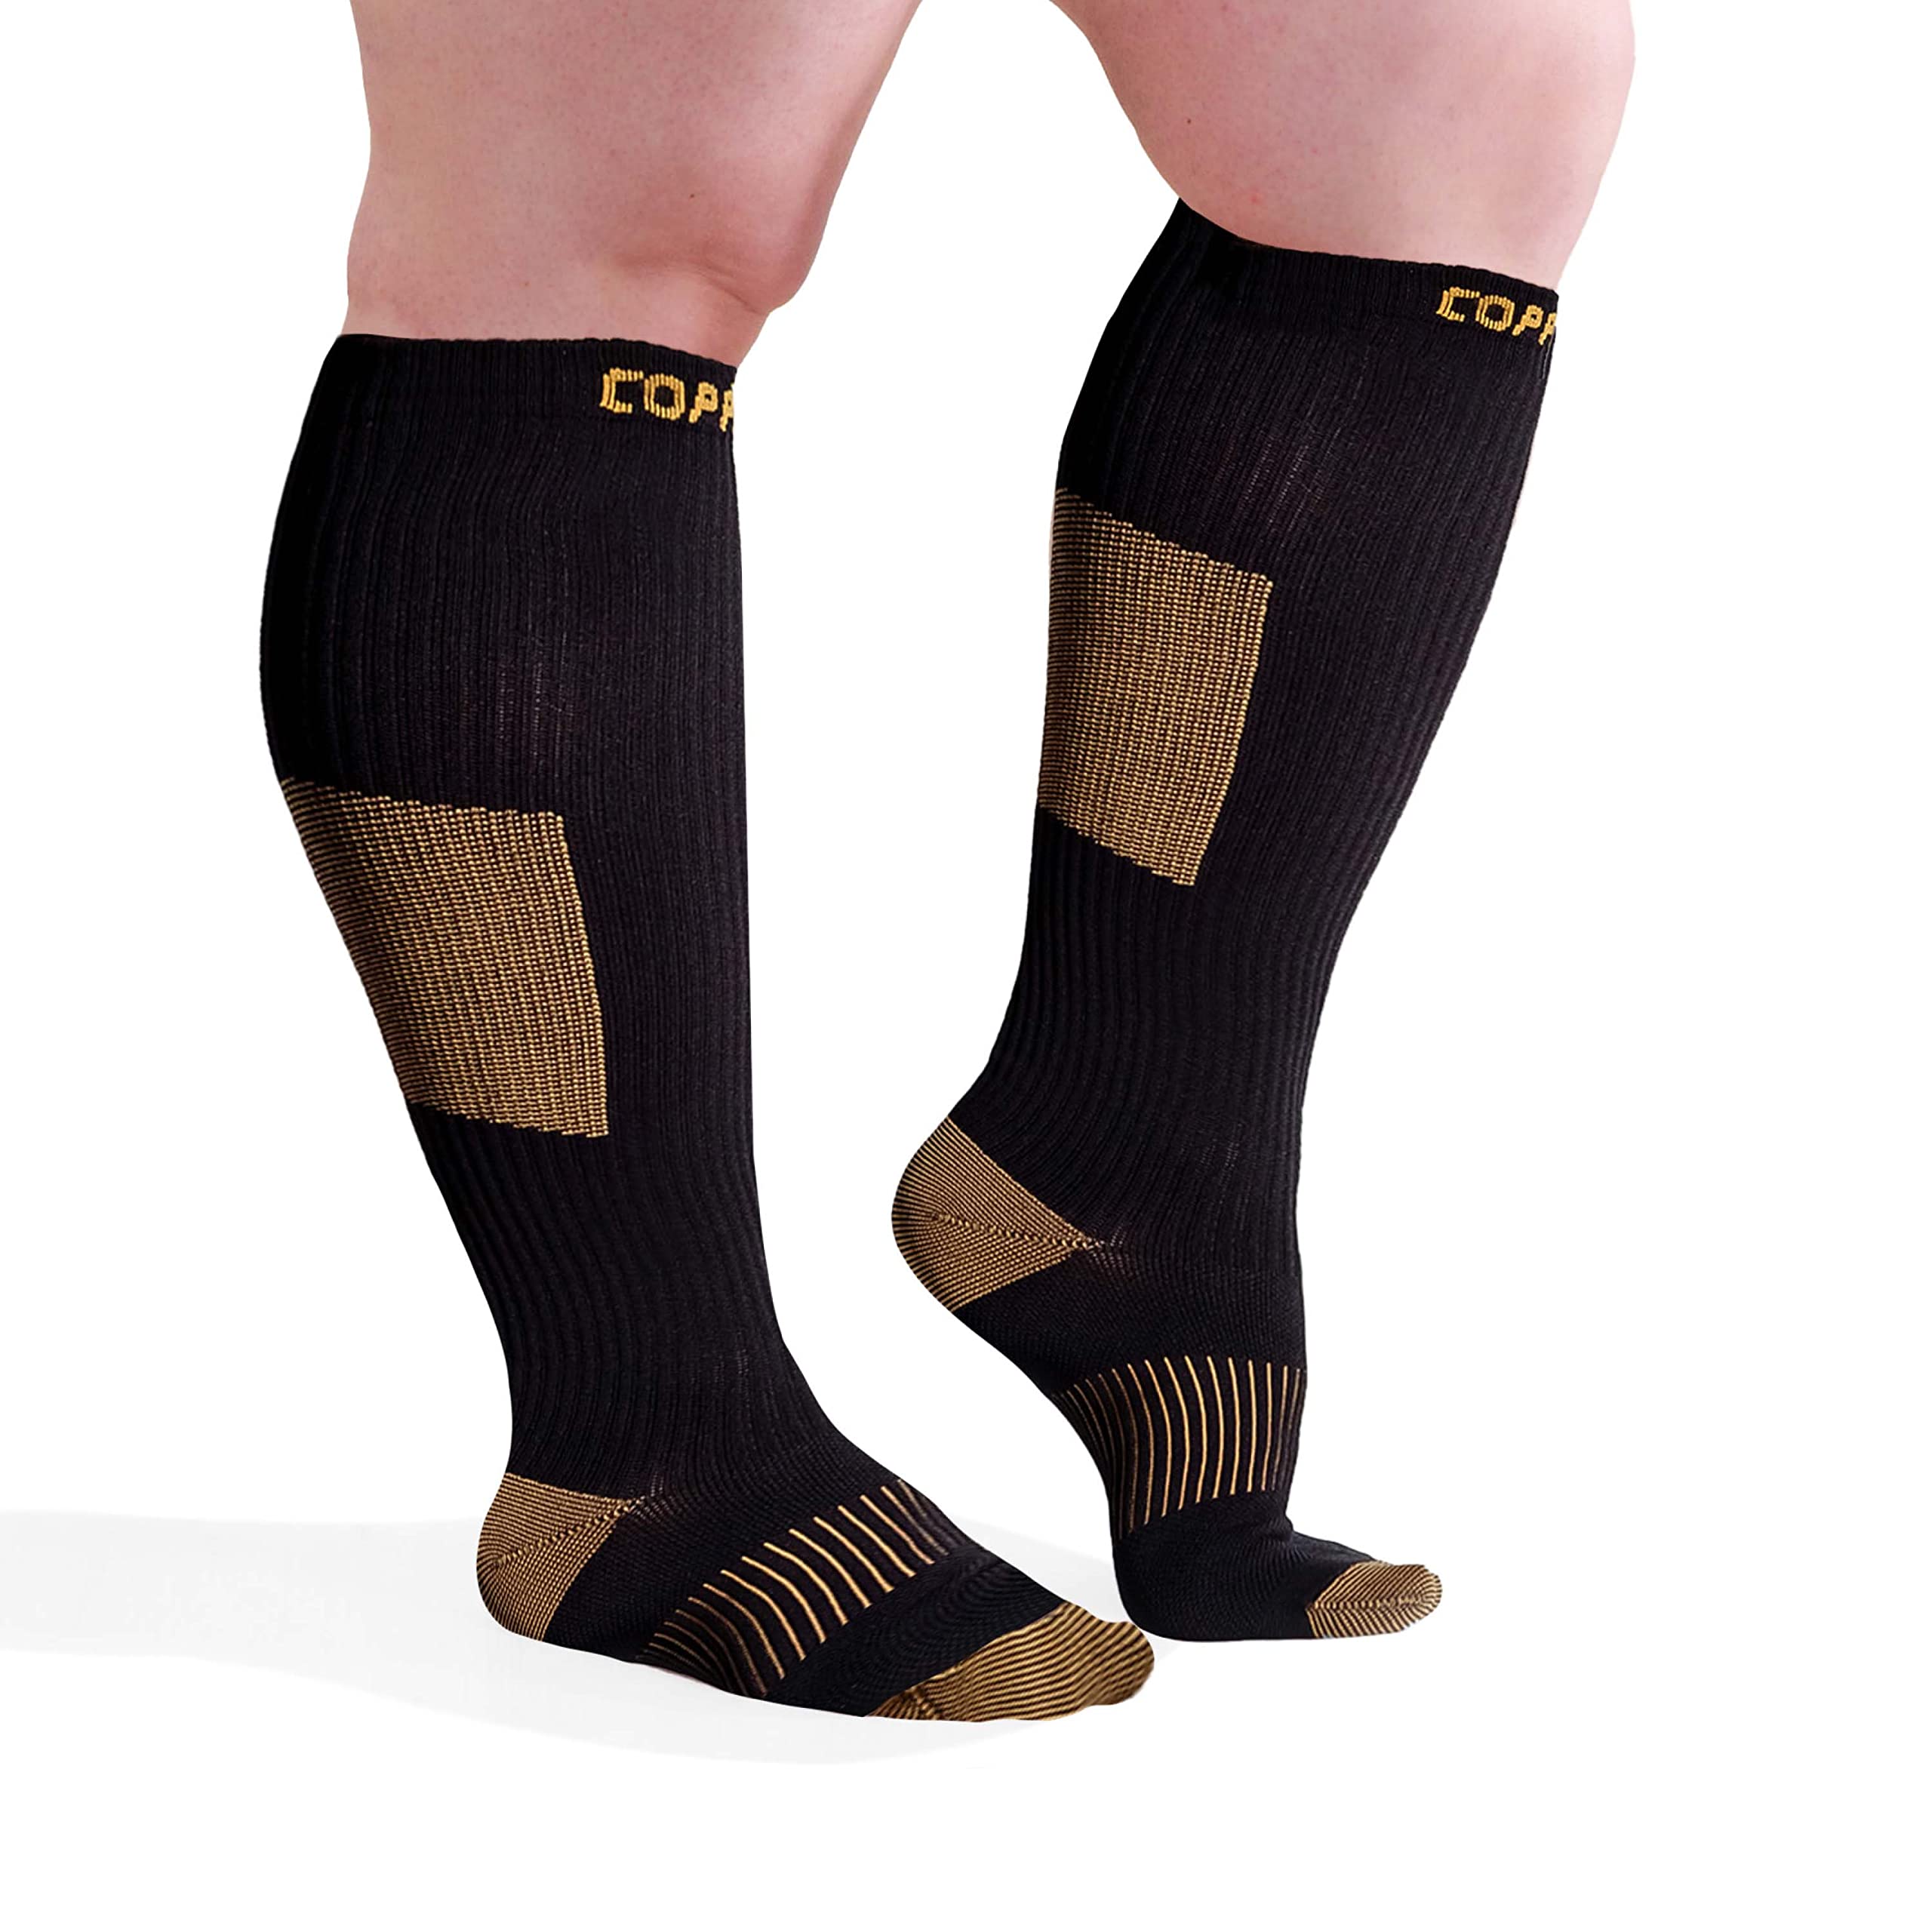 Wide Calf Copper Compression Socks for Women & Men - Diabetic Sock